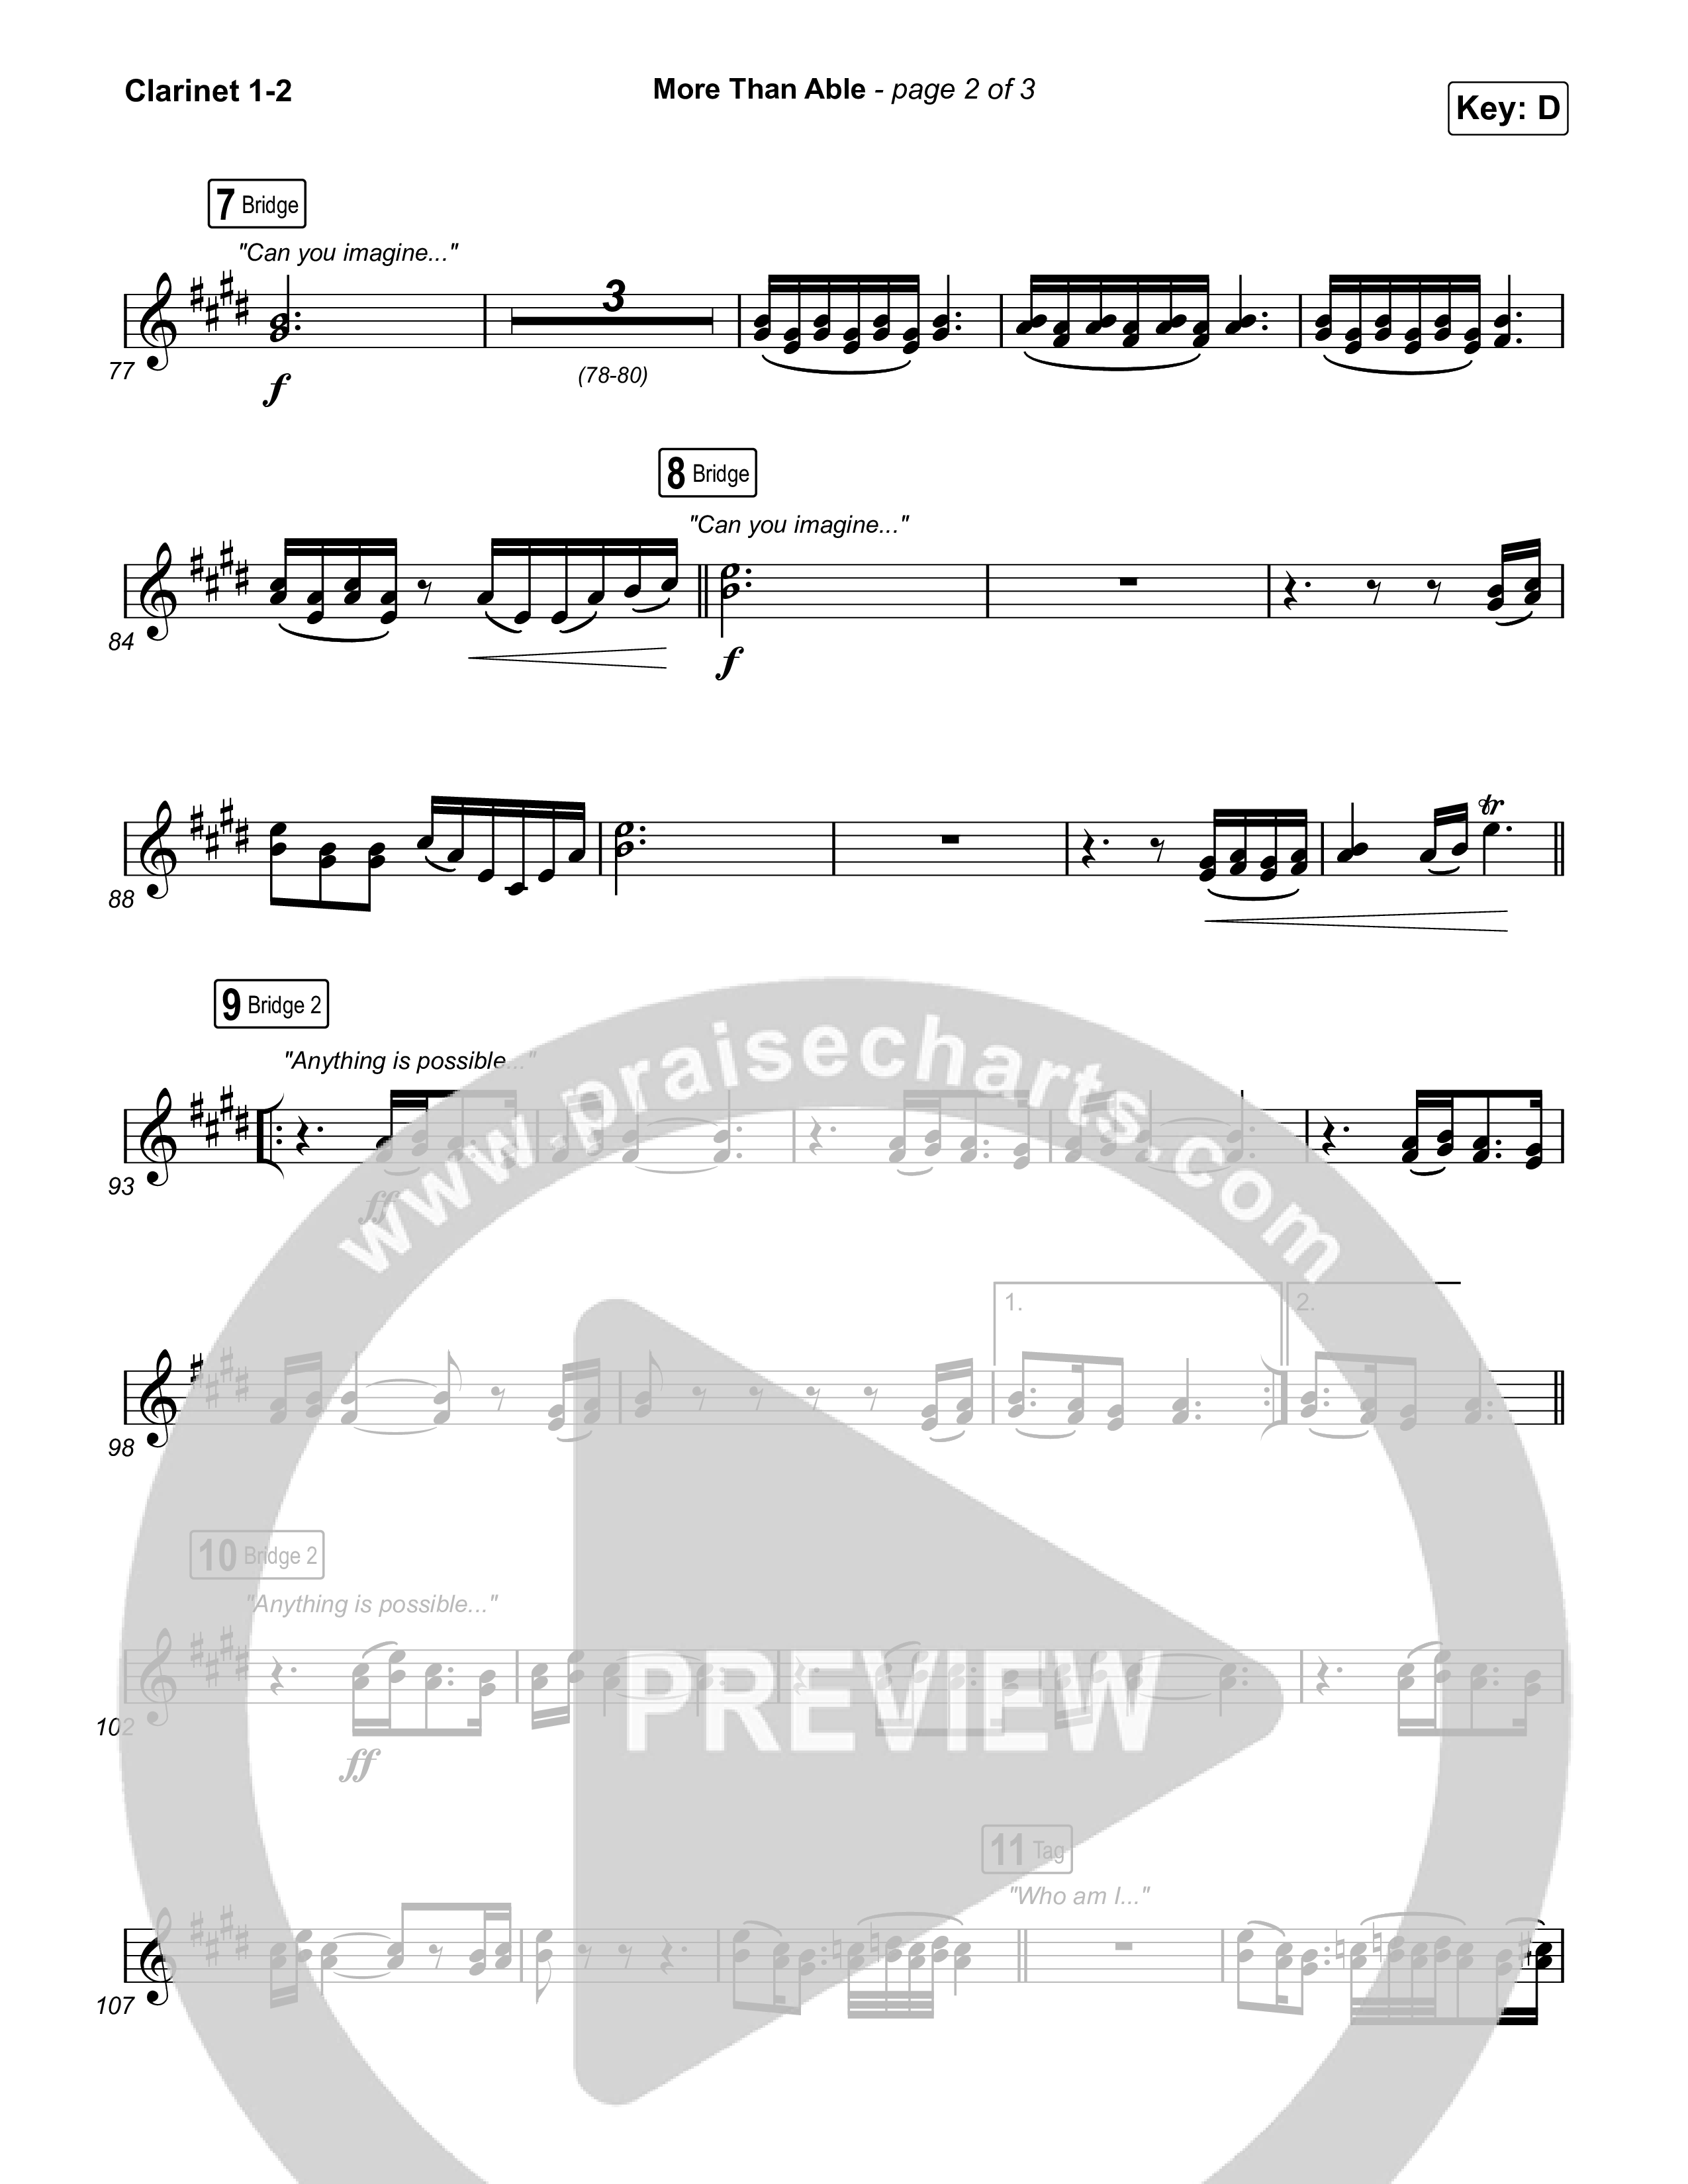 More Than Able Clarinet 1,2 (Maverick City Music / Tasha Cobbs Leonard)